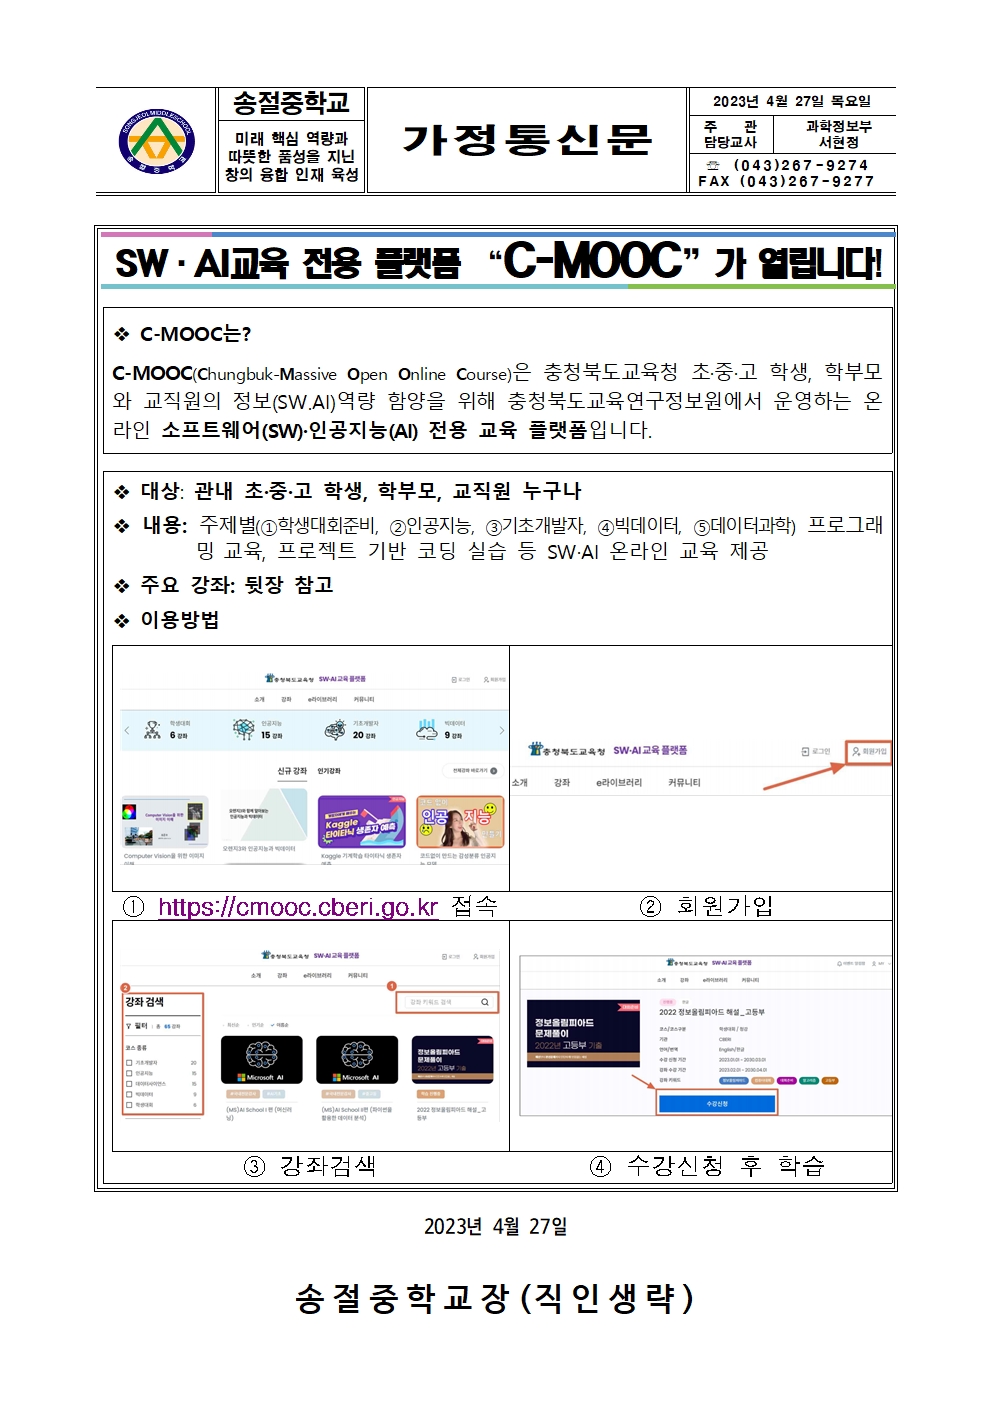 SW·AI교육 전용 플랫폼 “C-MOOC(가정통신문)001